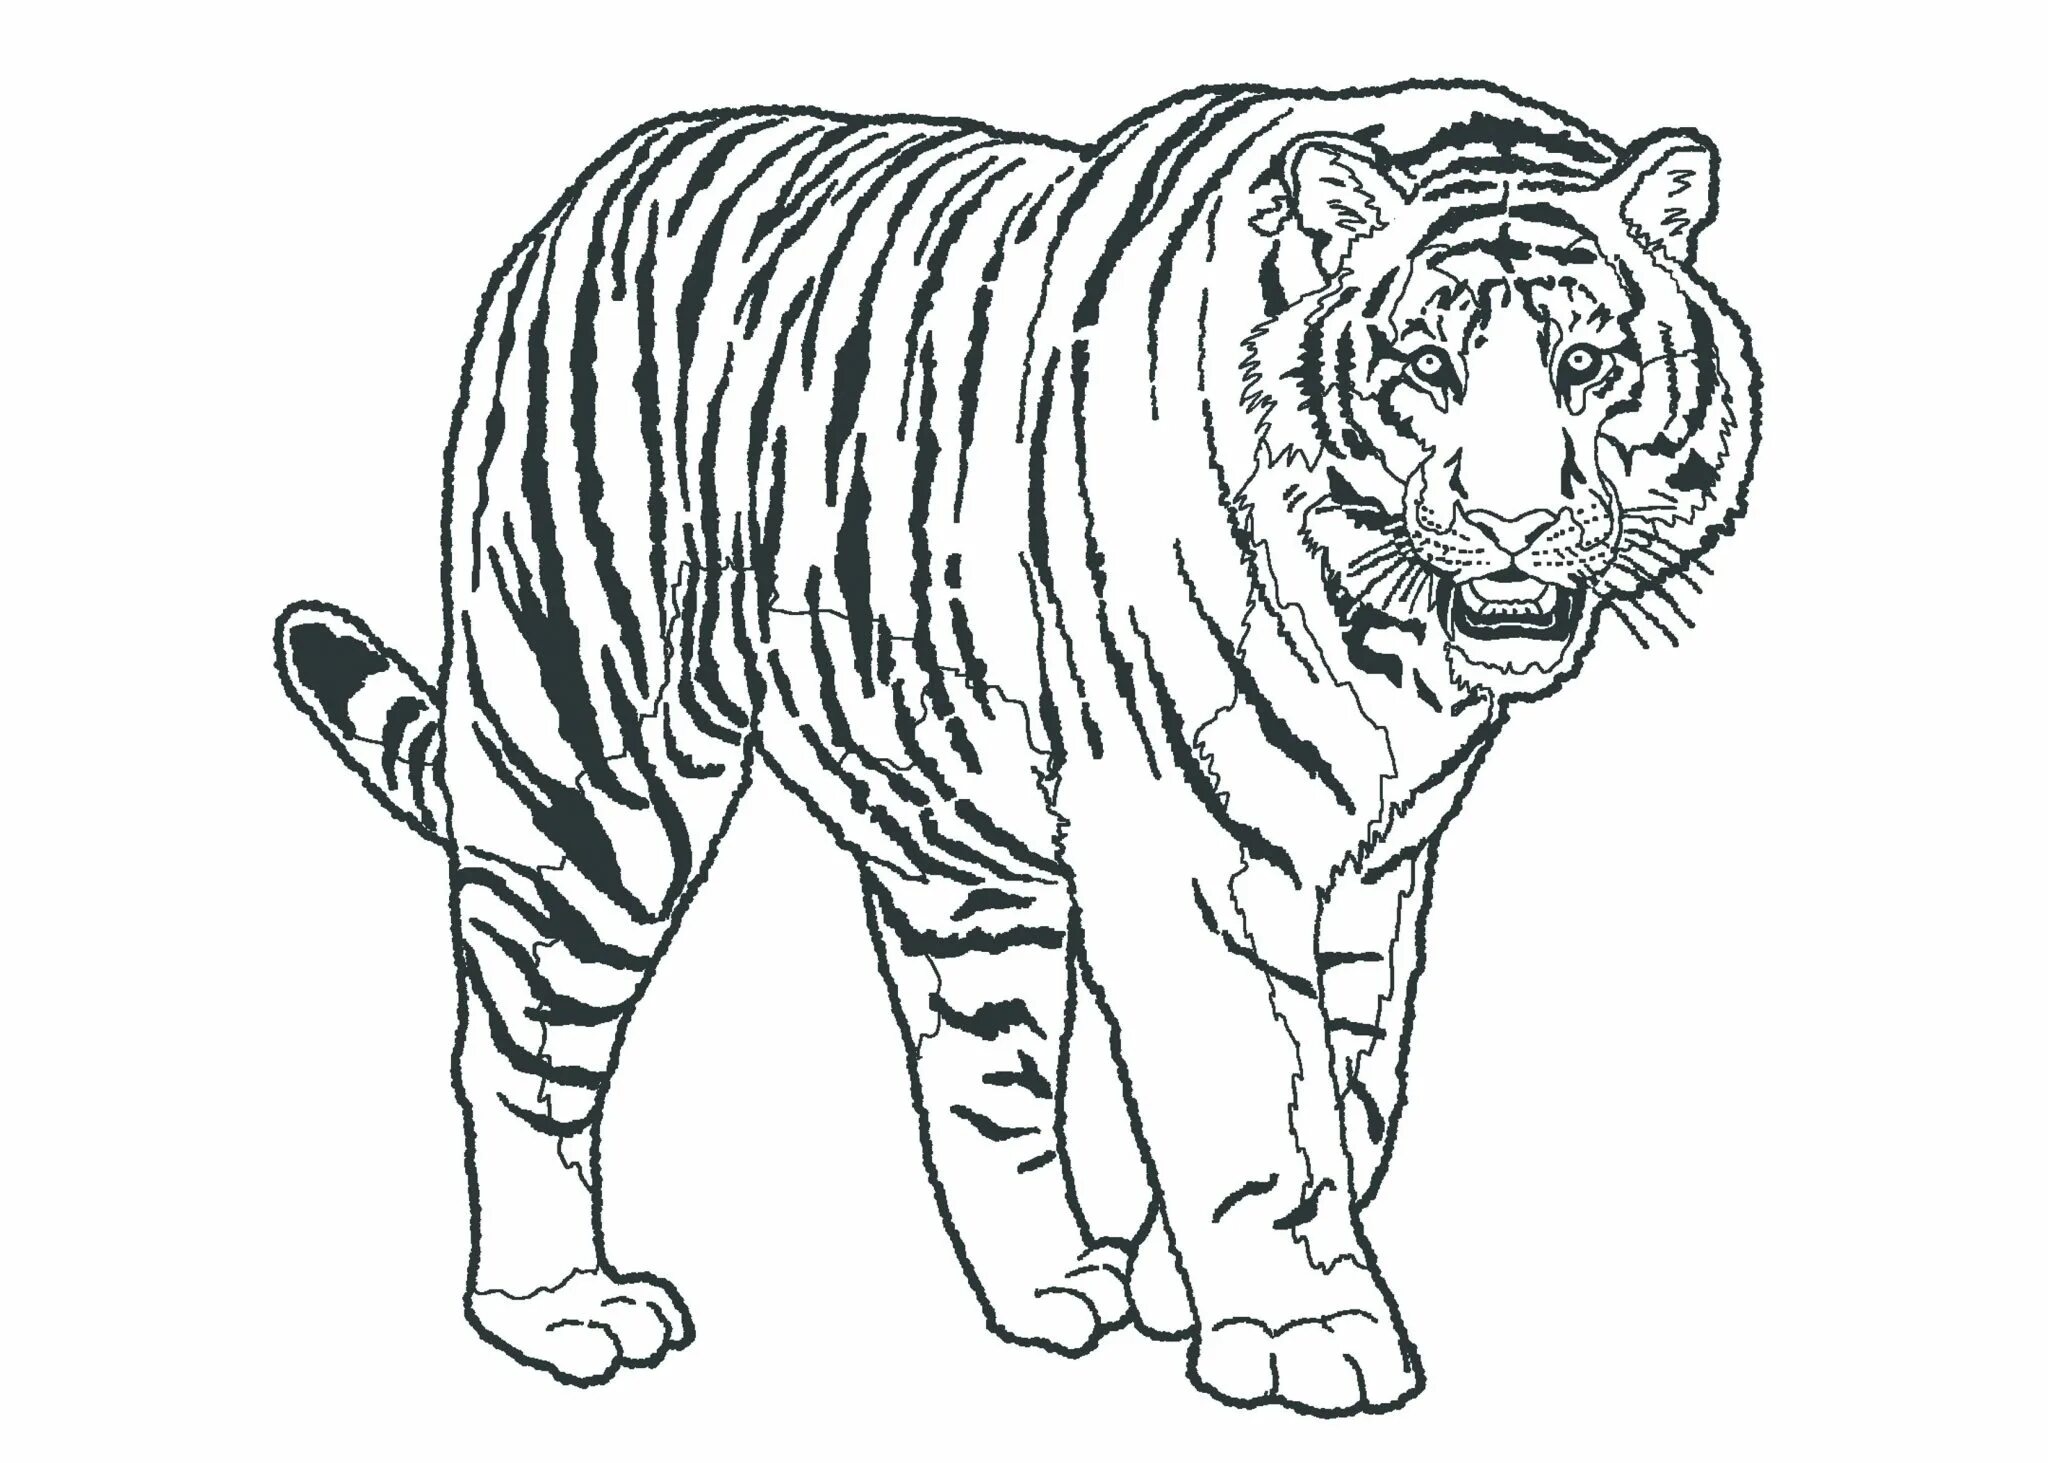 Ussuri tiger #15